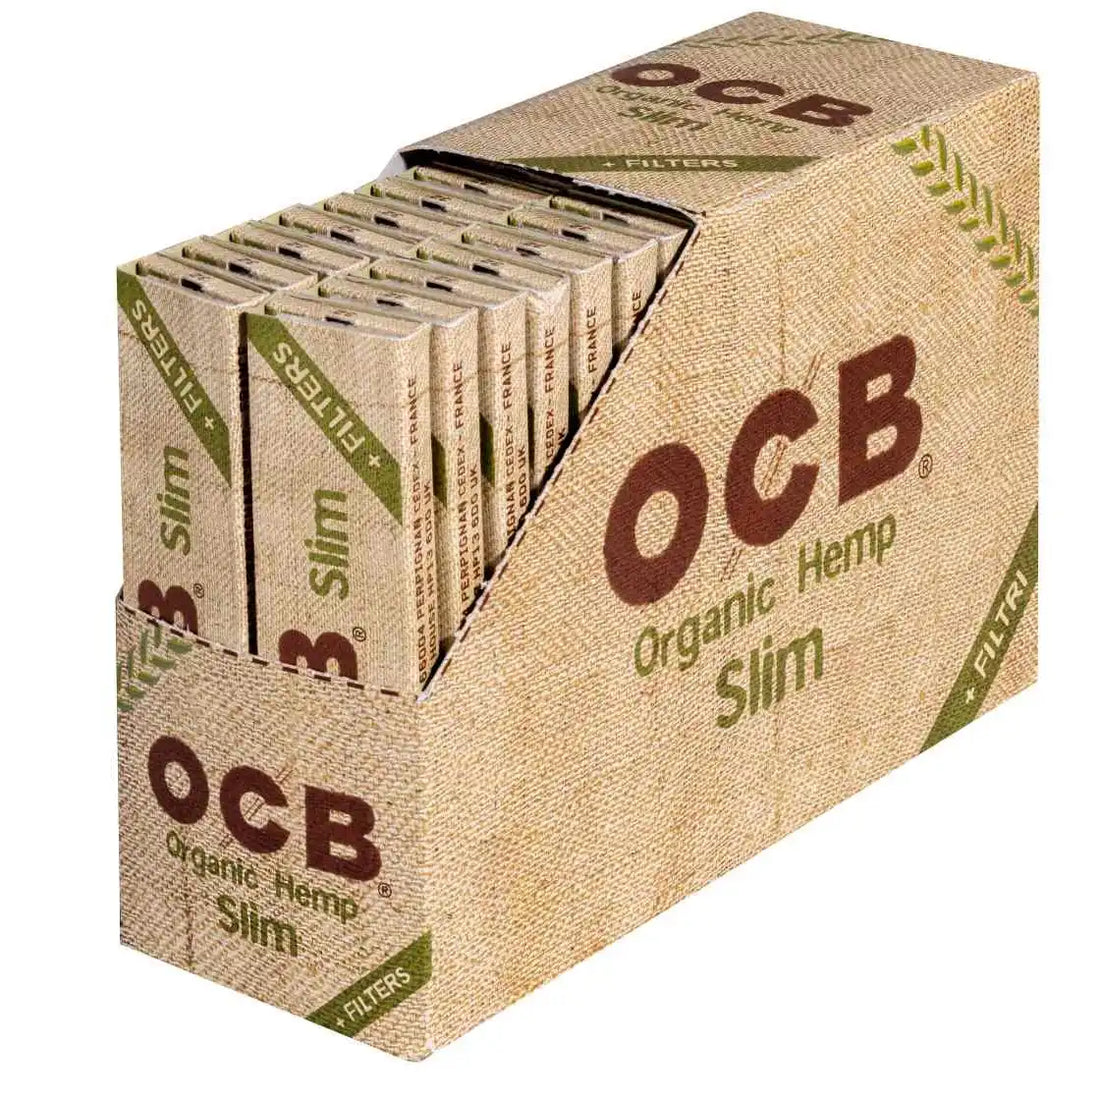 OCB Organic Hemp Slim with Filters